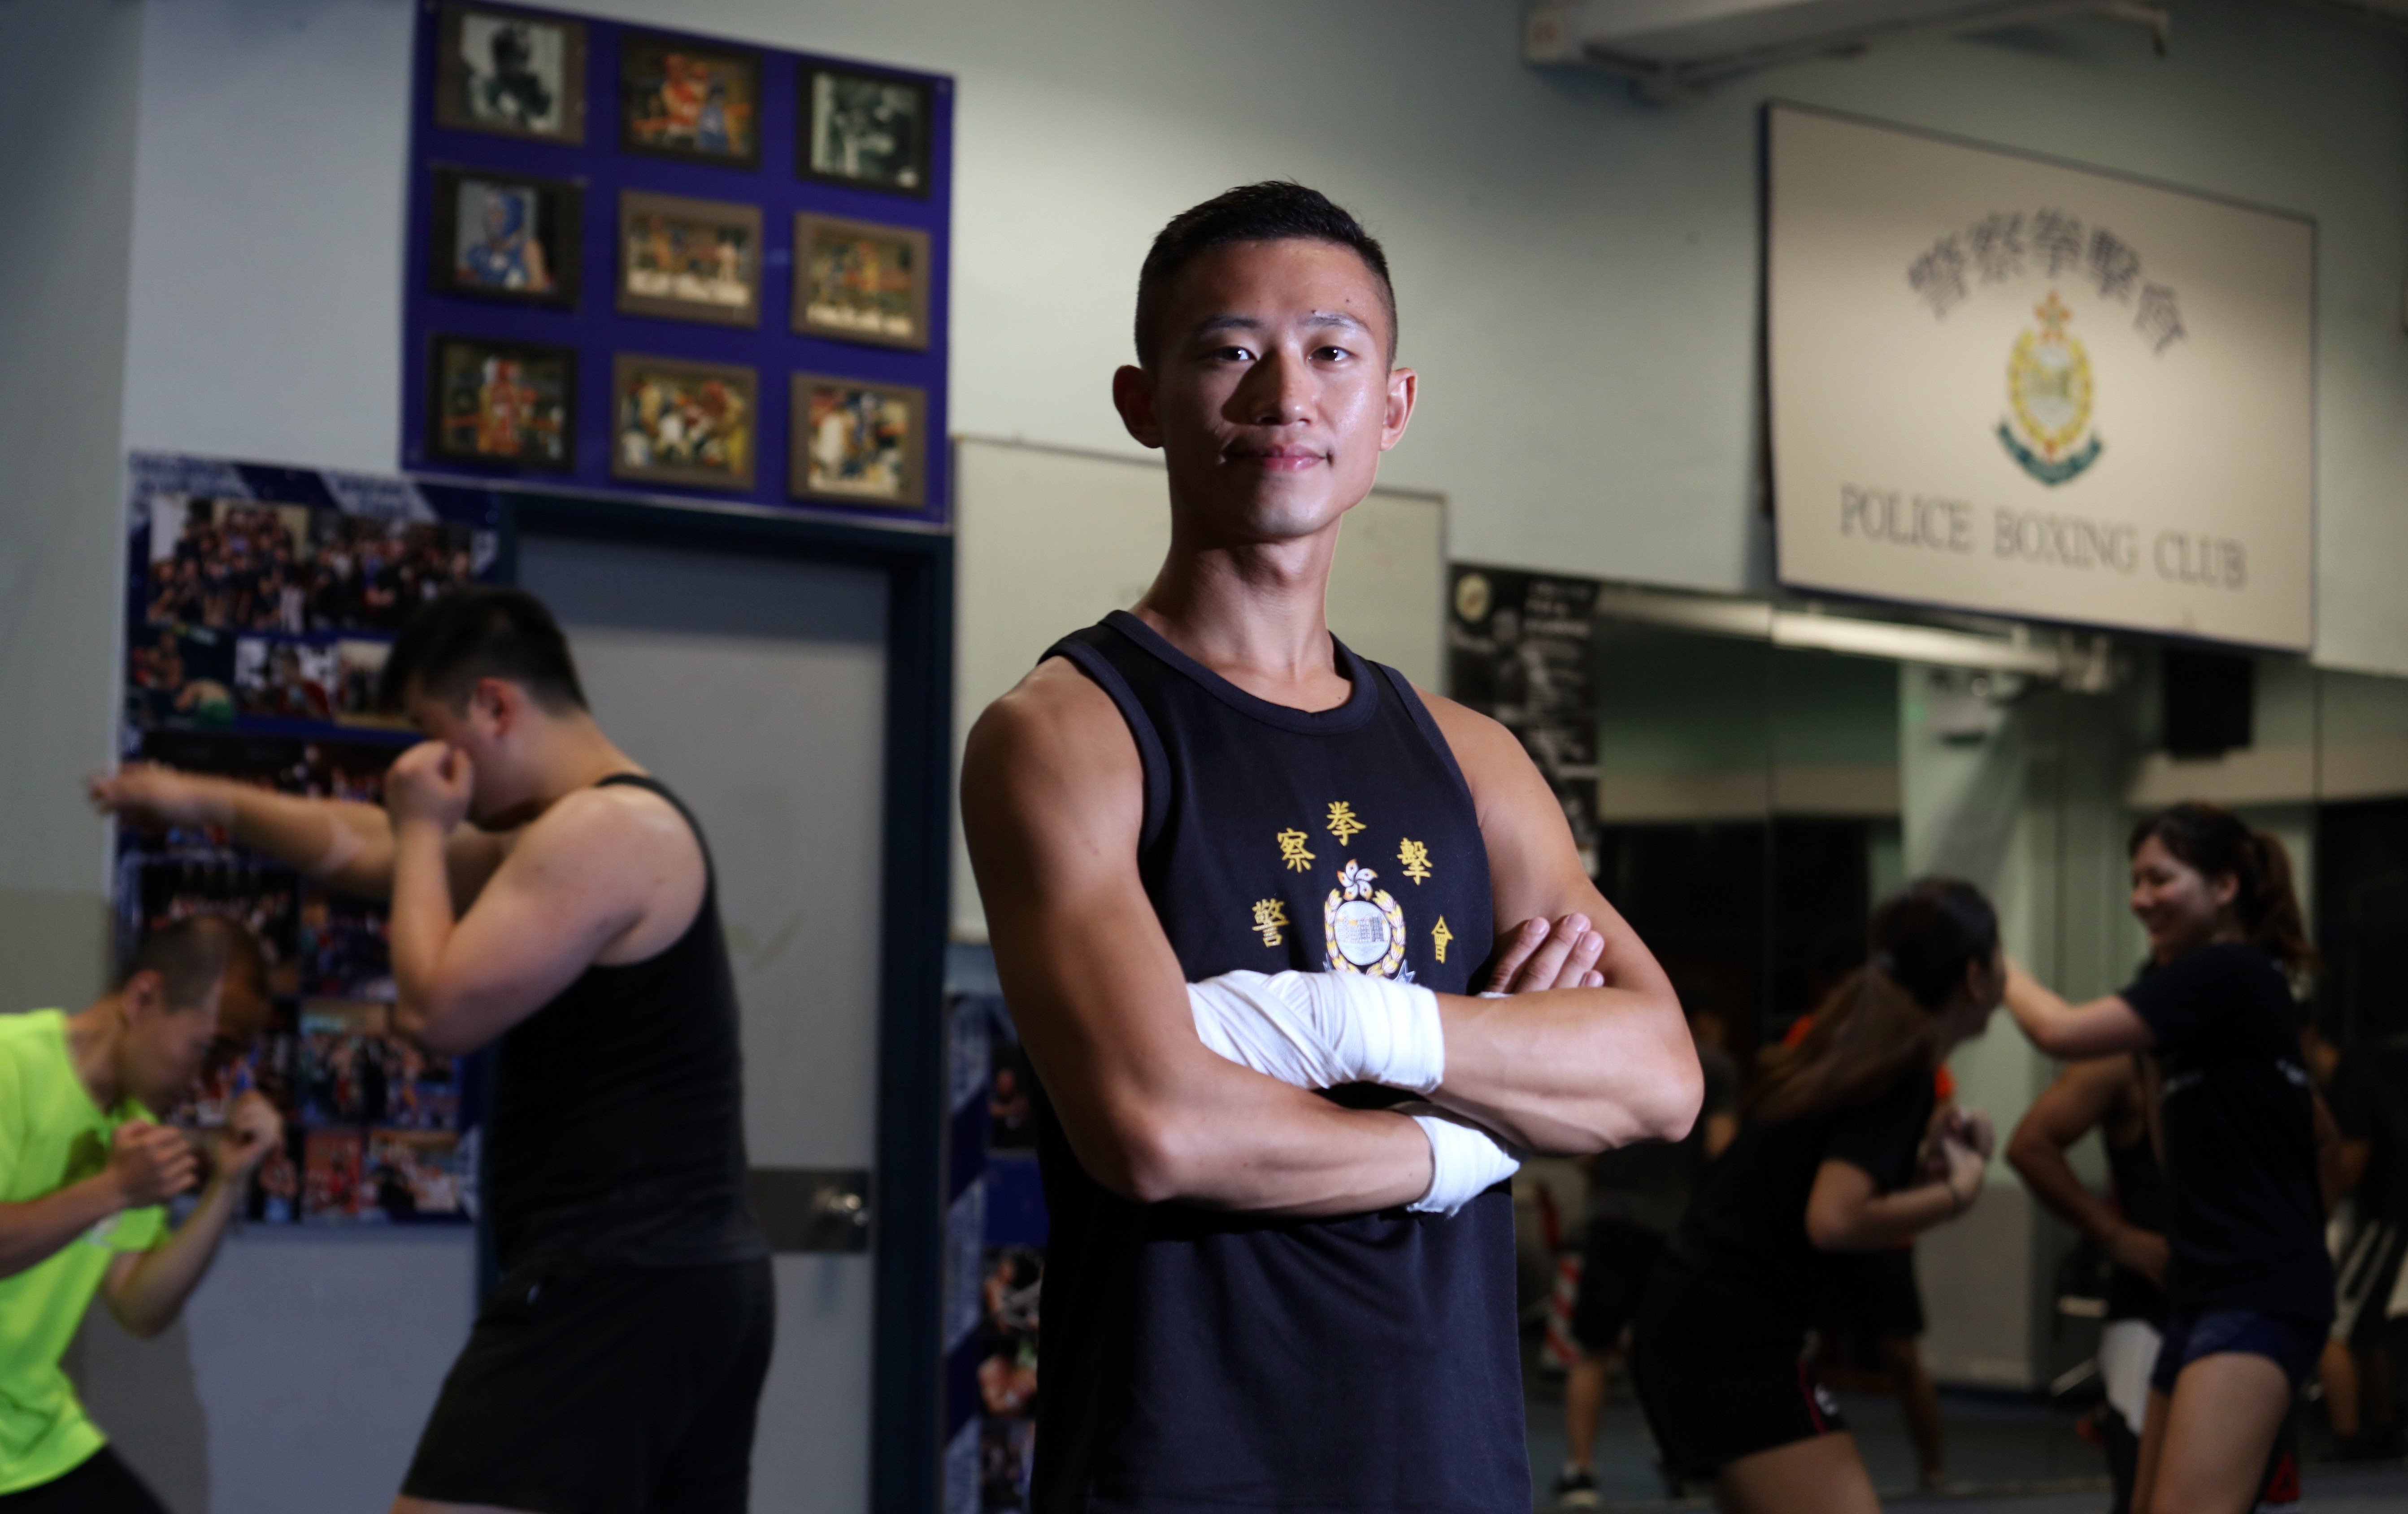 Hong Kong policeman Edwin Ng prepares at the Tai Po Police Boxing Club ahead of his second professional fight. Photo: Felix Wong